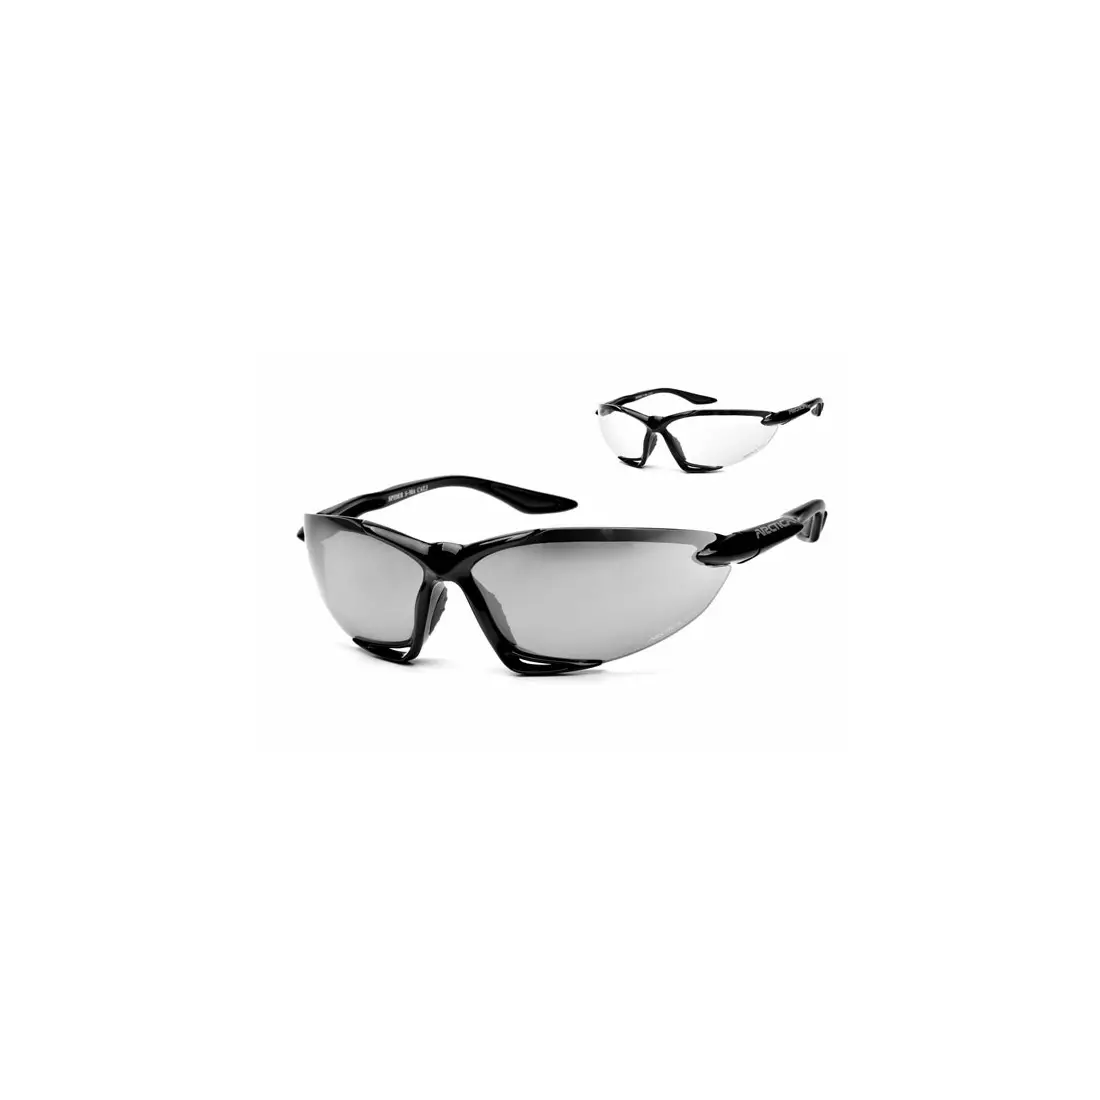 ARCTICA S-50A sports glasses - color: Black